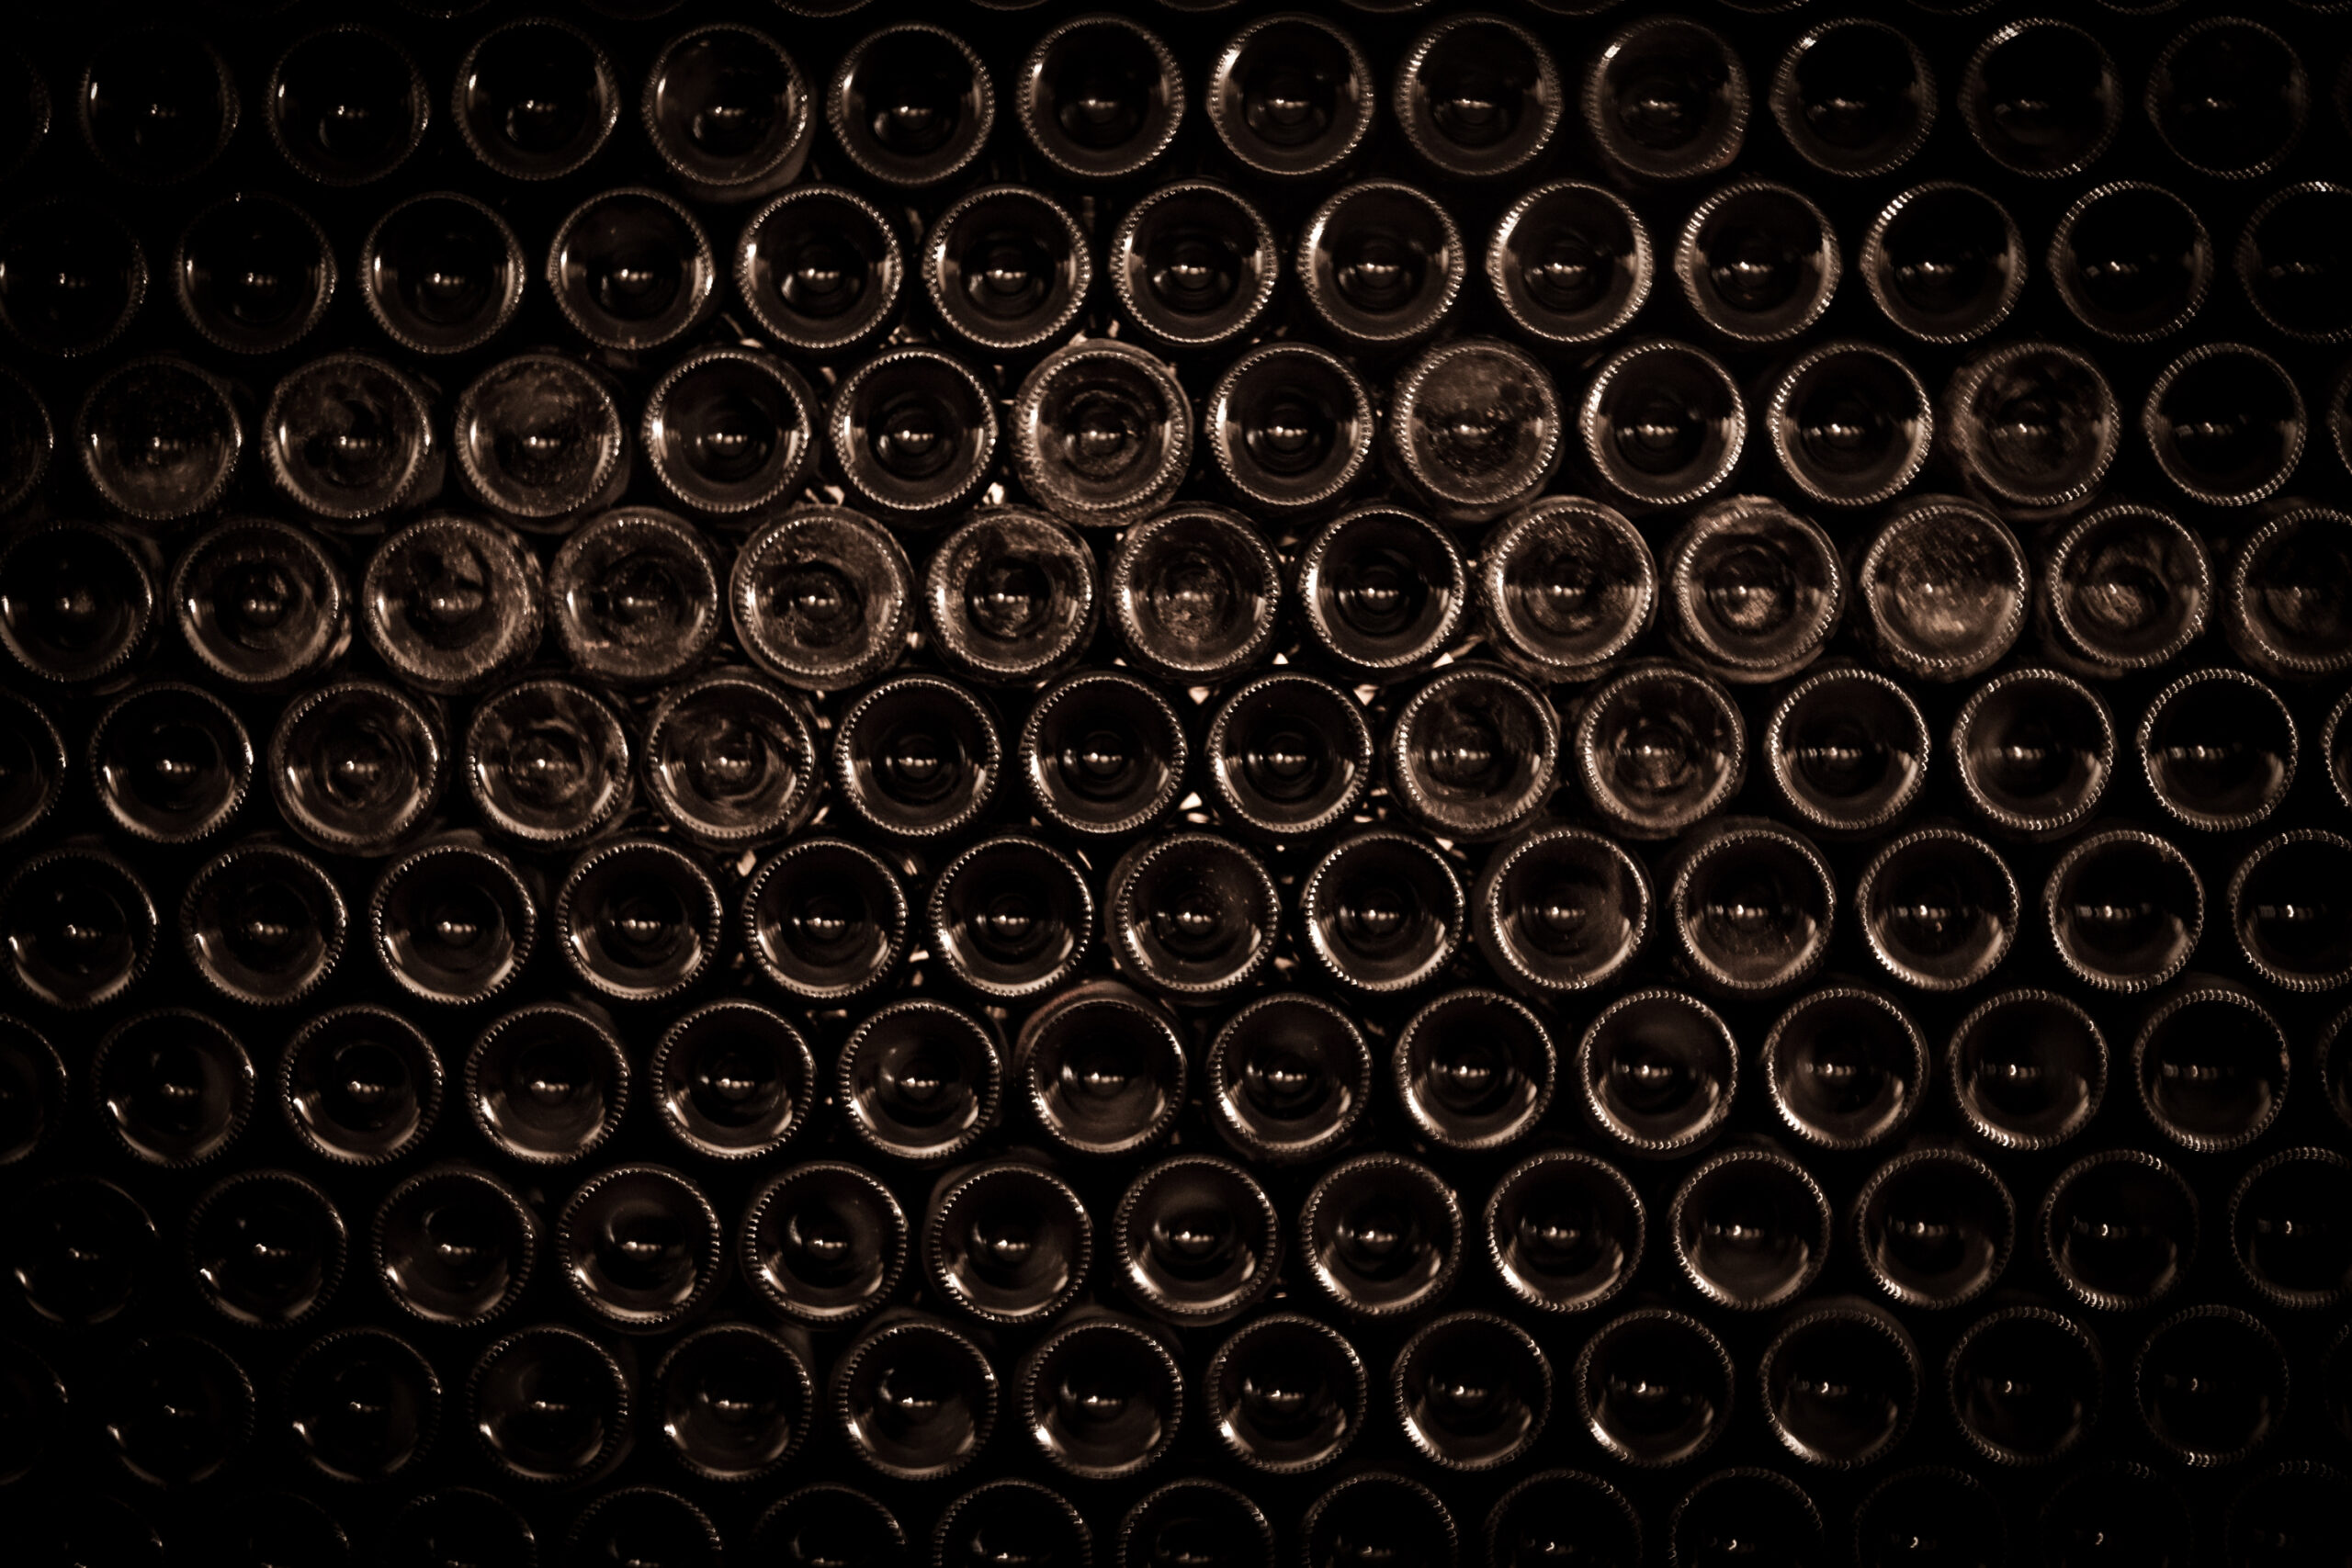 Wine Bottles in an Old Wine Cellar Background